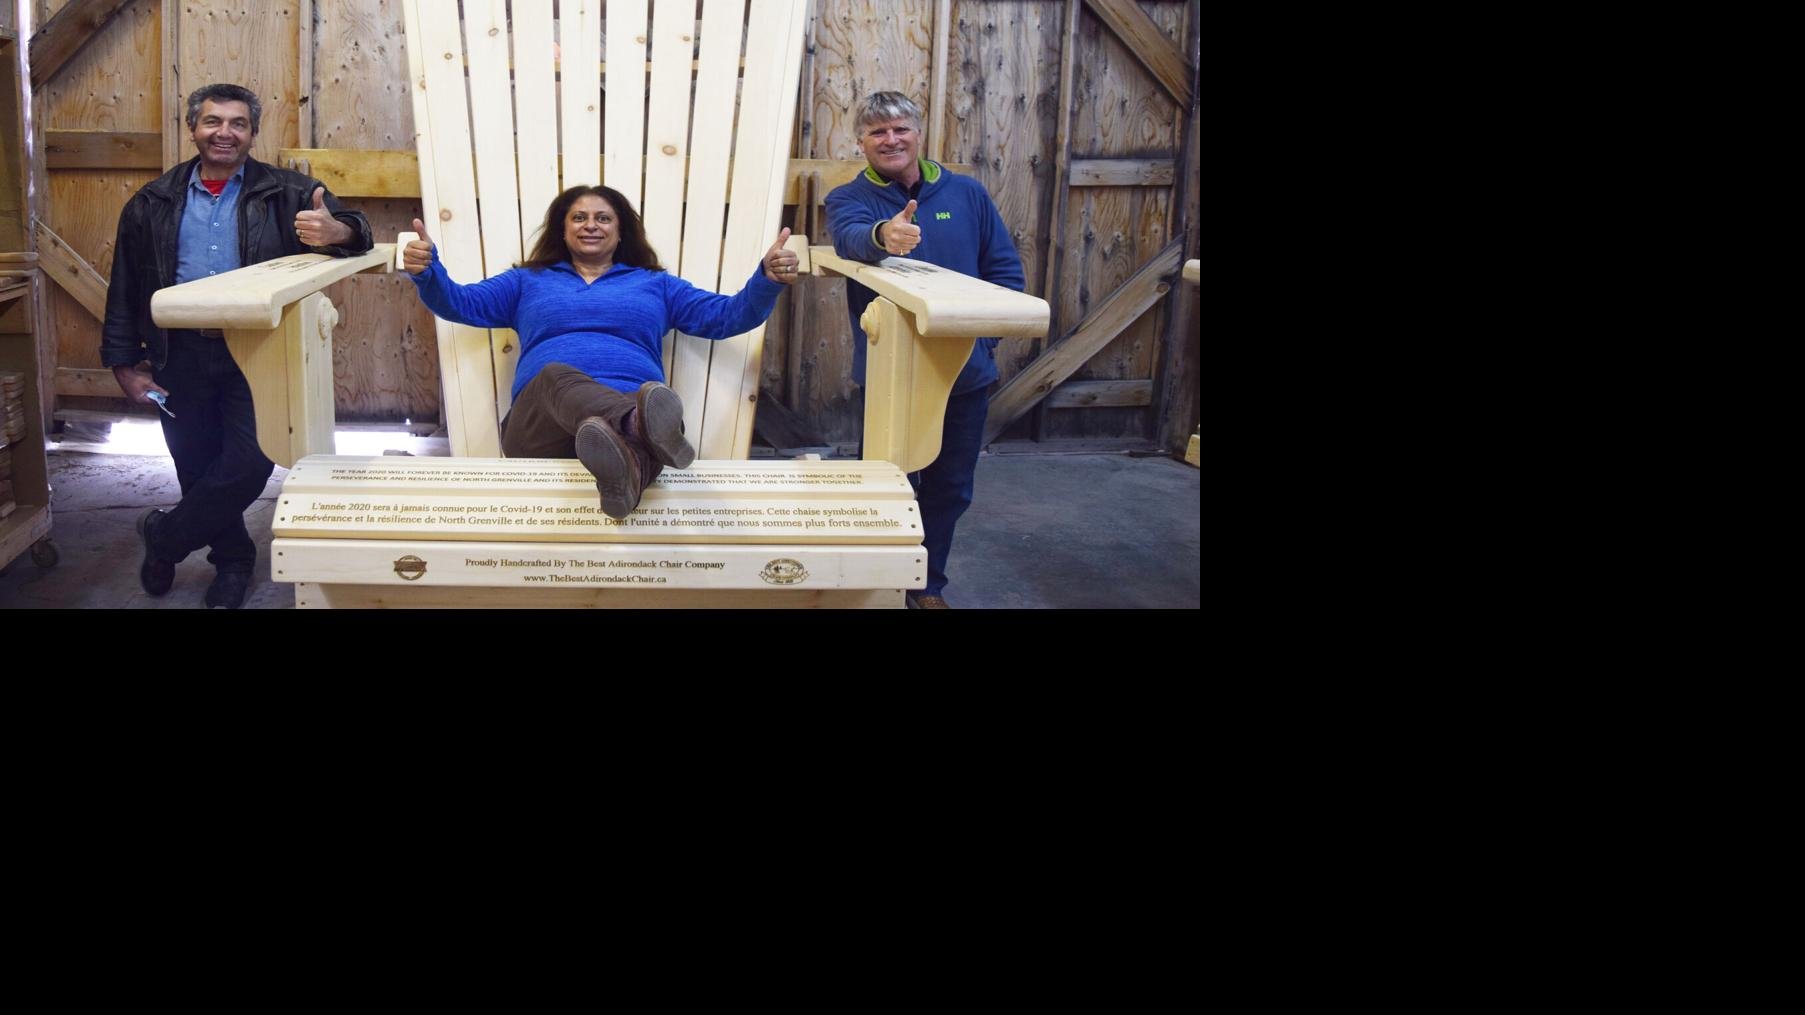 Making a Giant Adirondack Chair